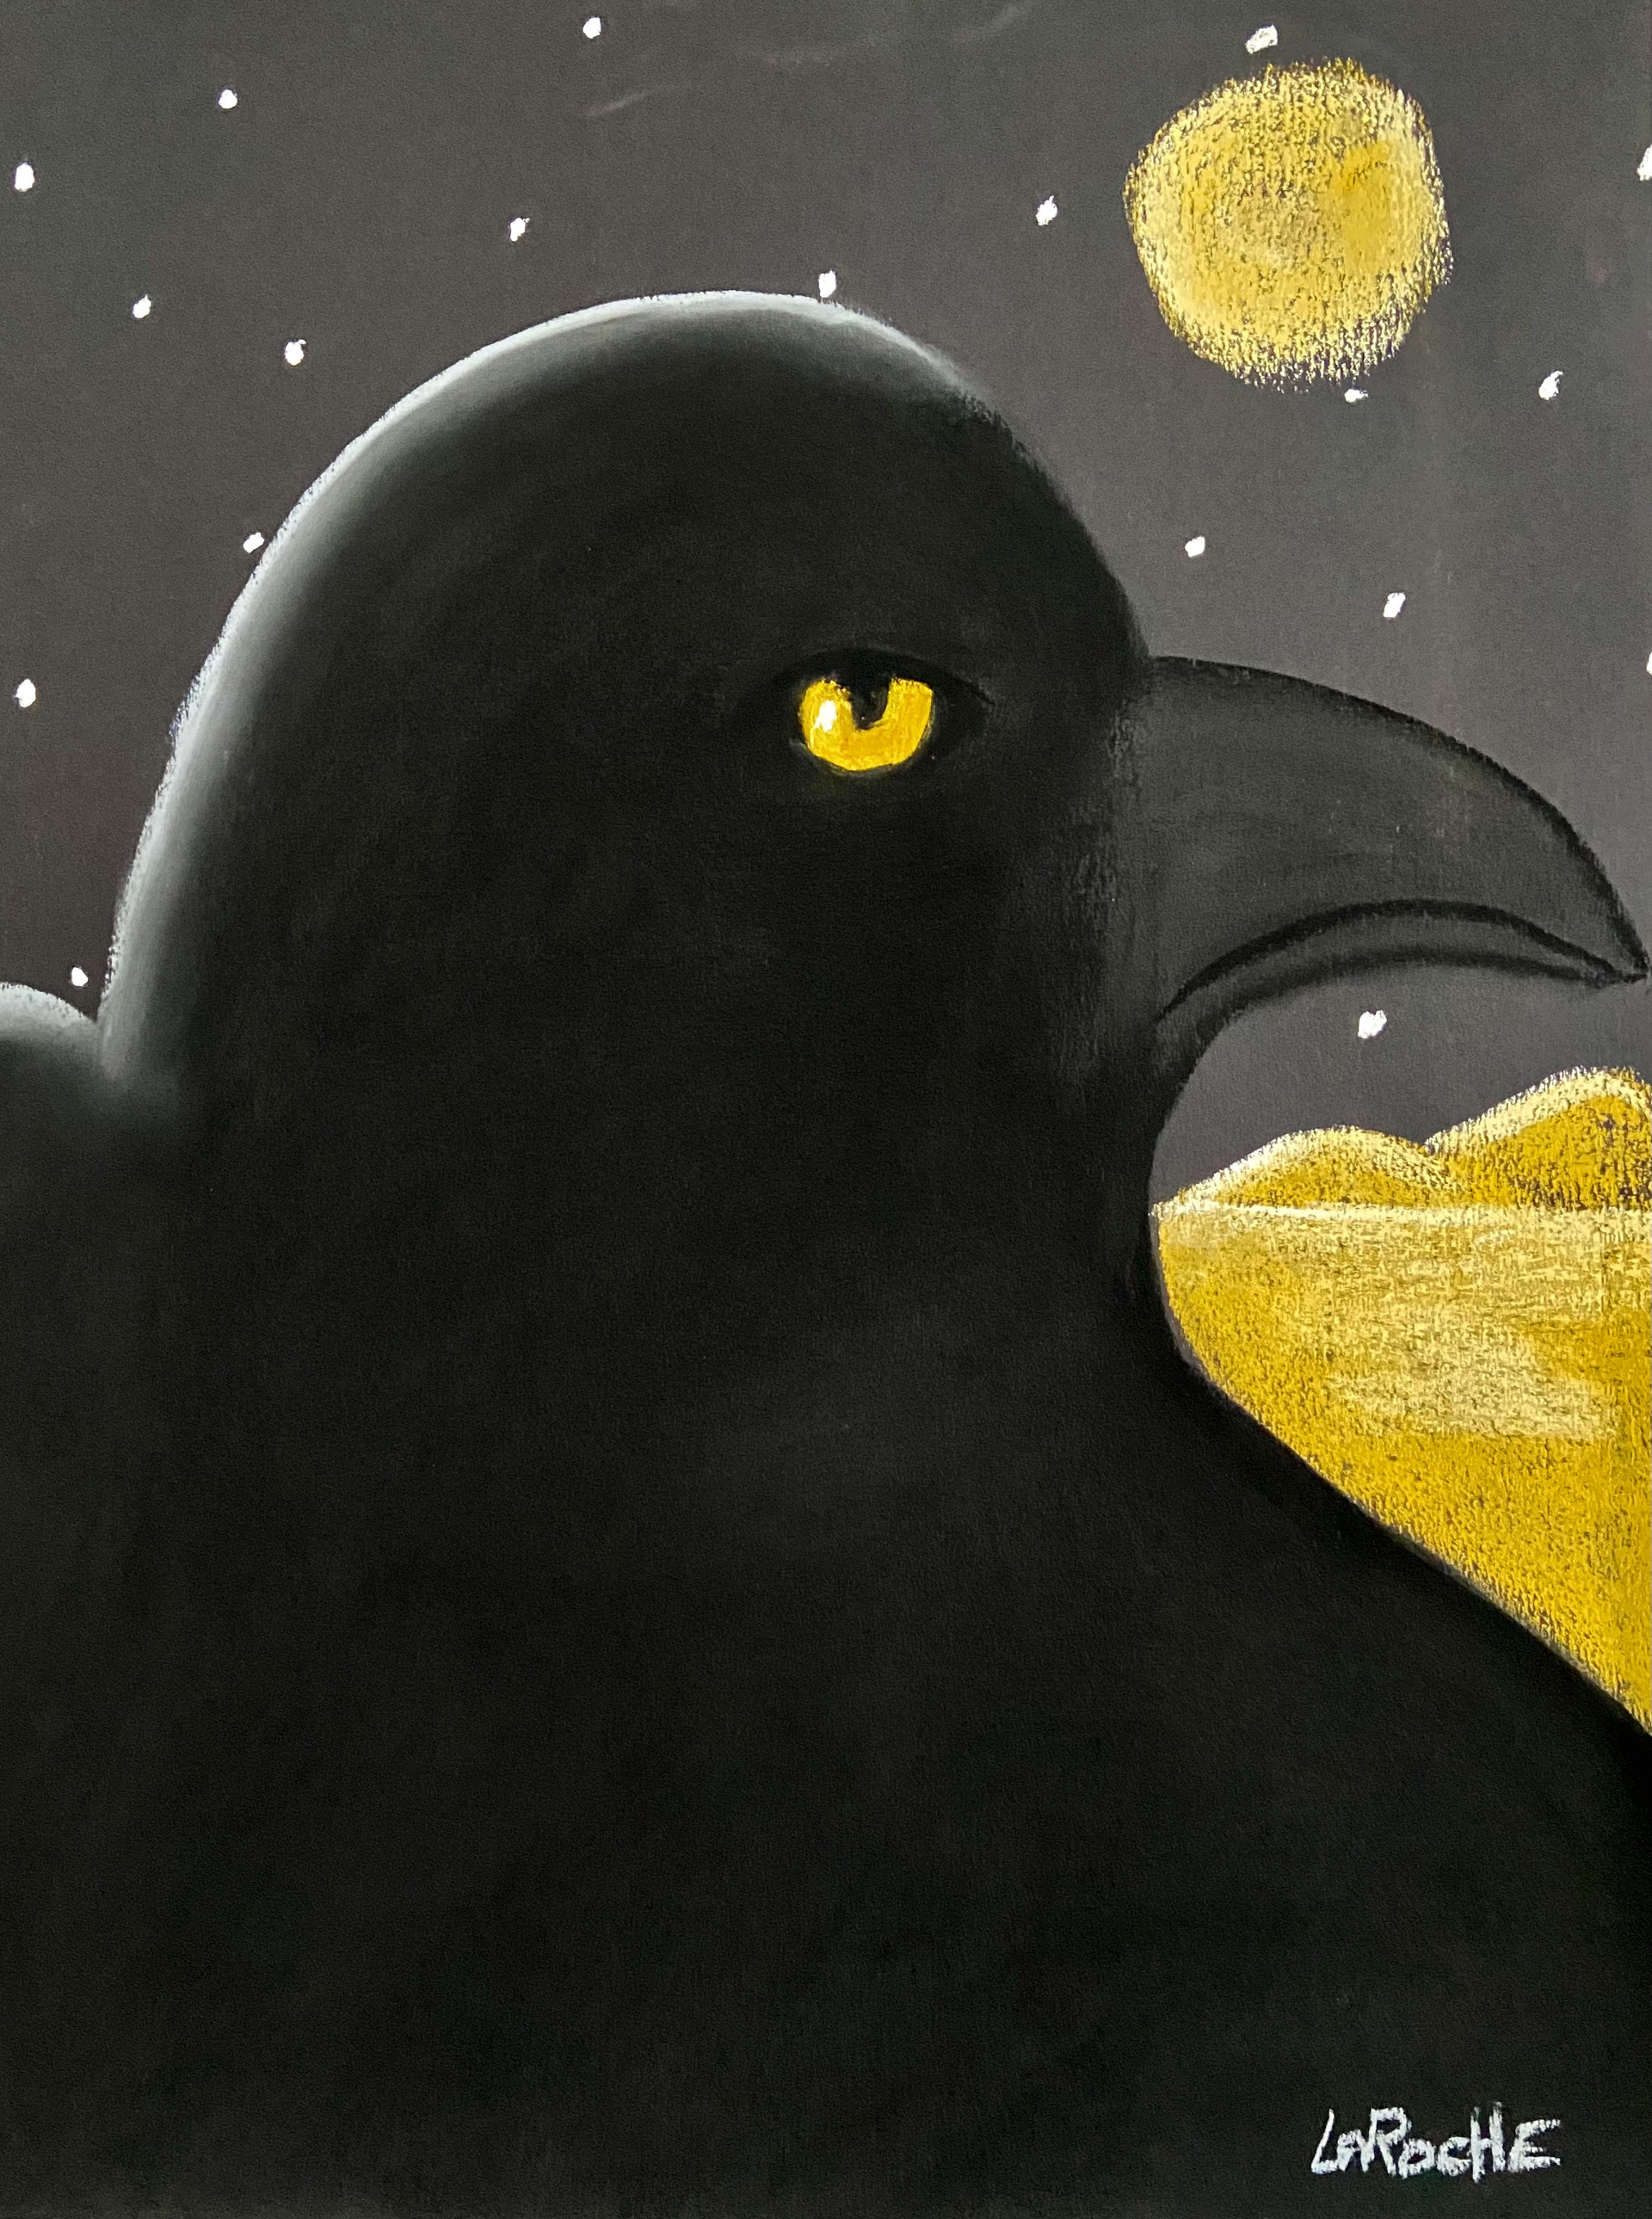 Midnight Raven: Under the Golden Moon by Carole LaRoche